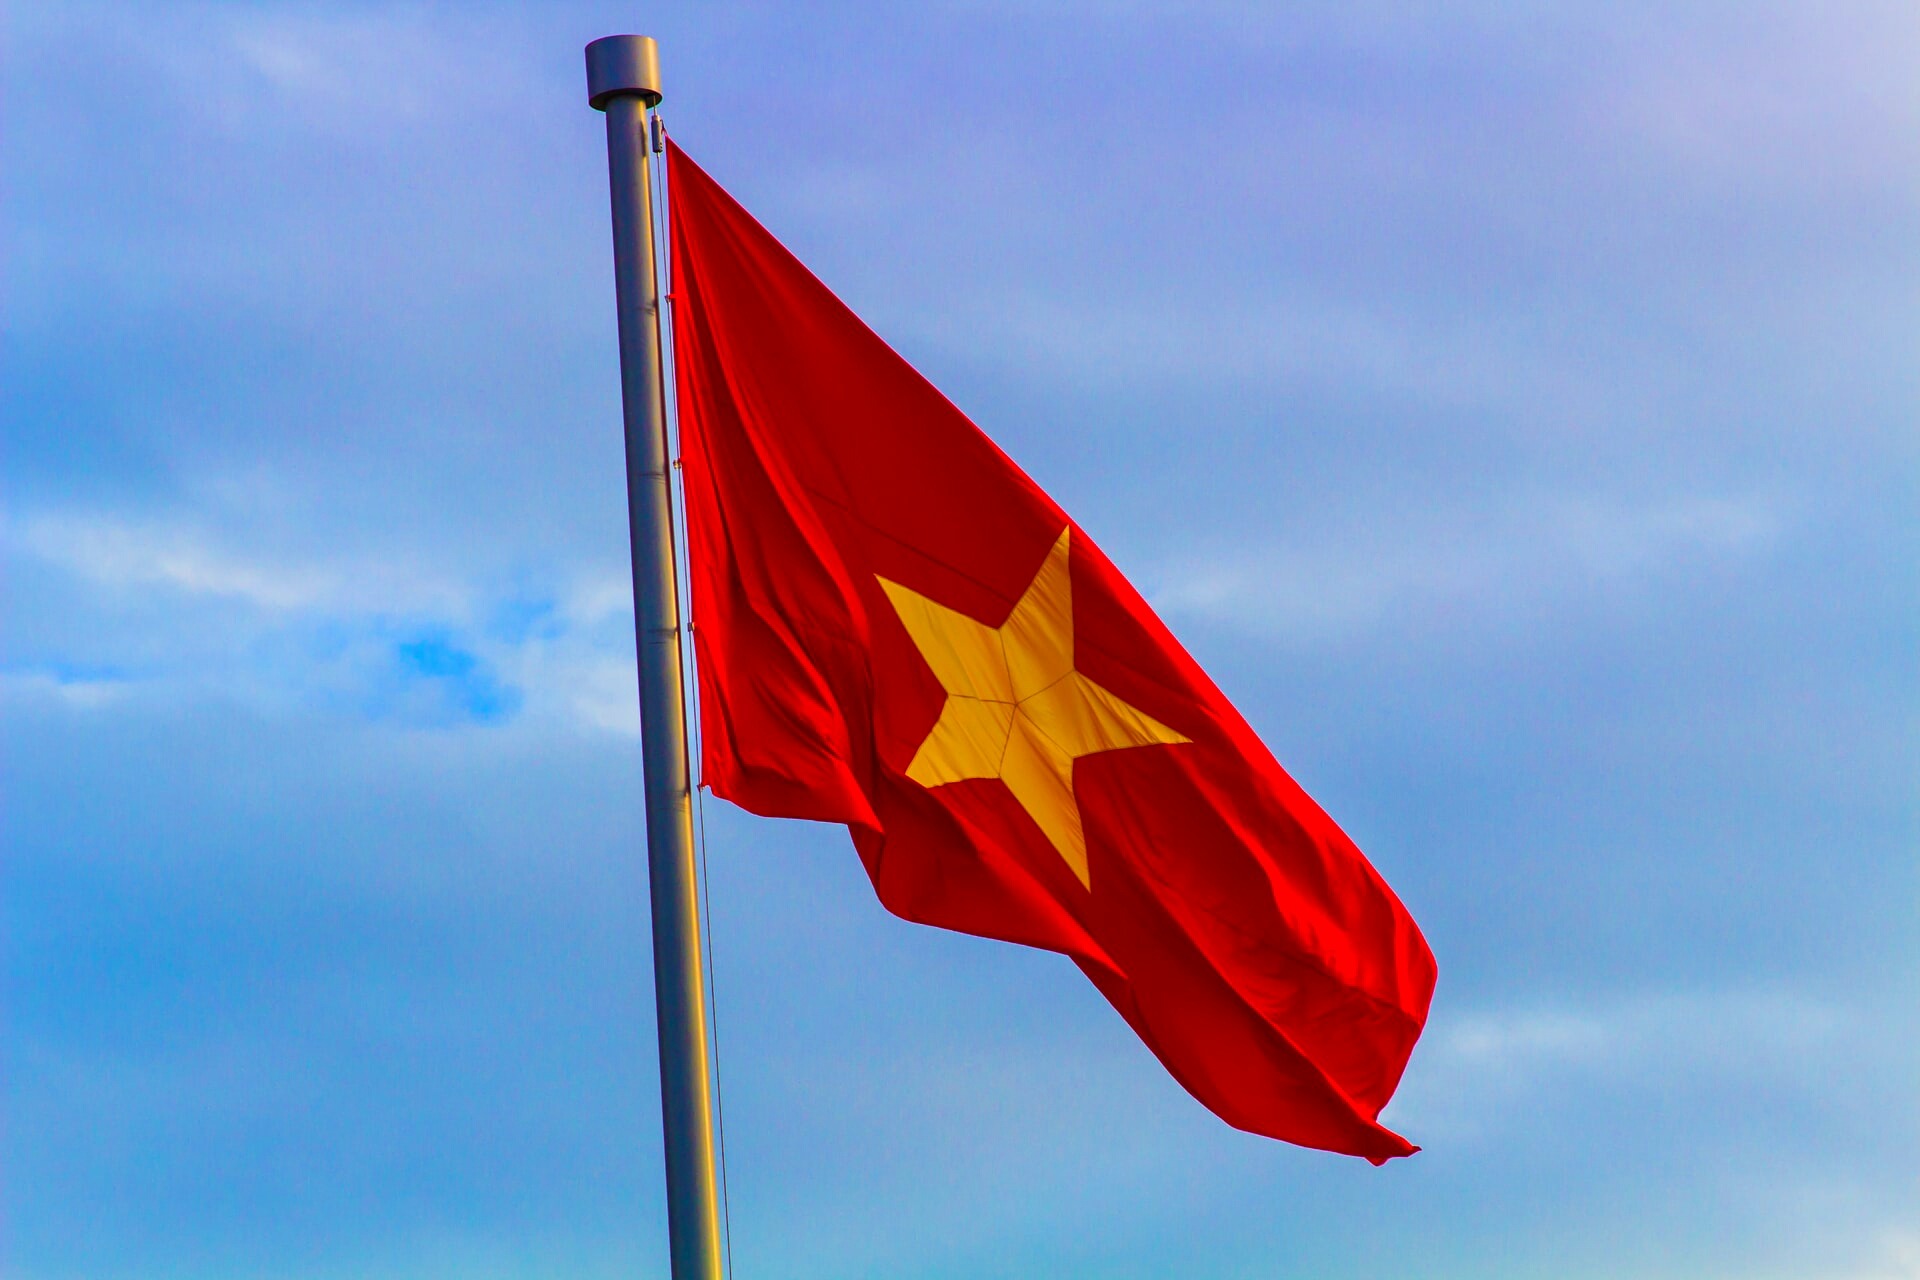 Vietnam-Flag.jpg - 248.99 kB